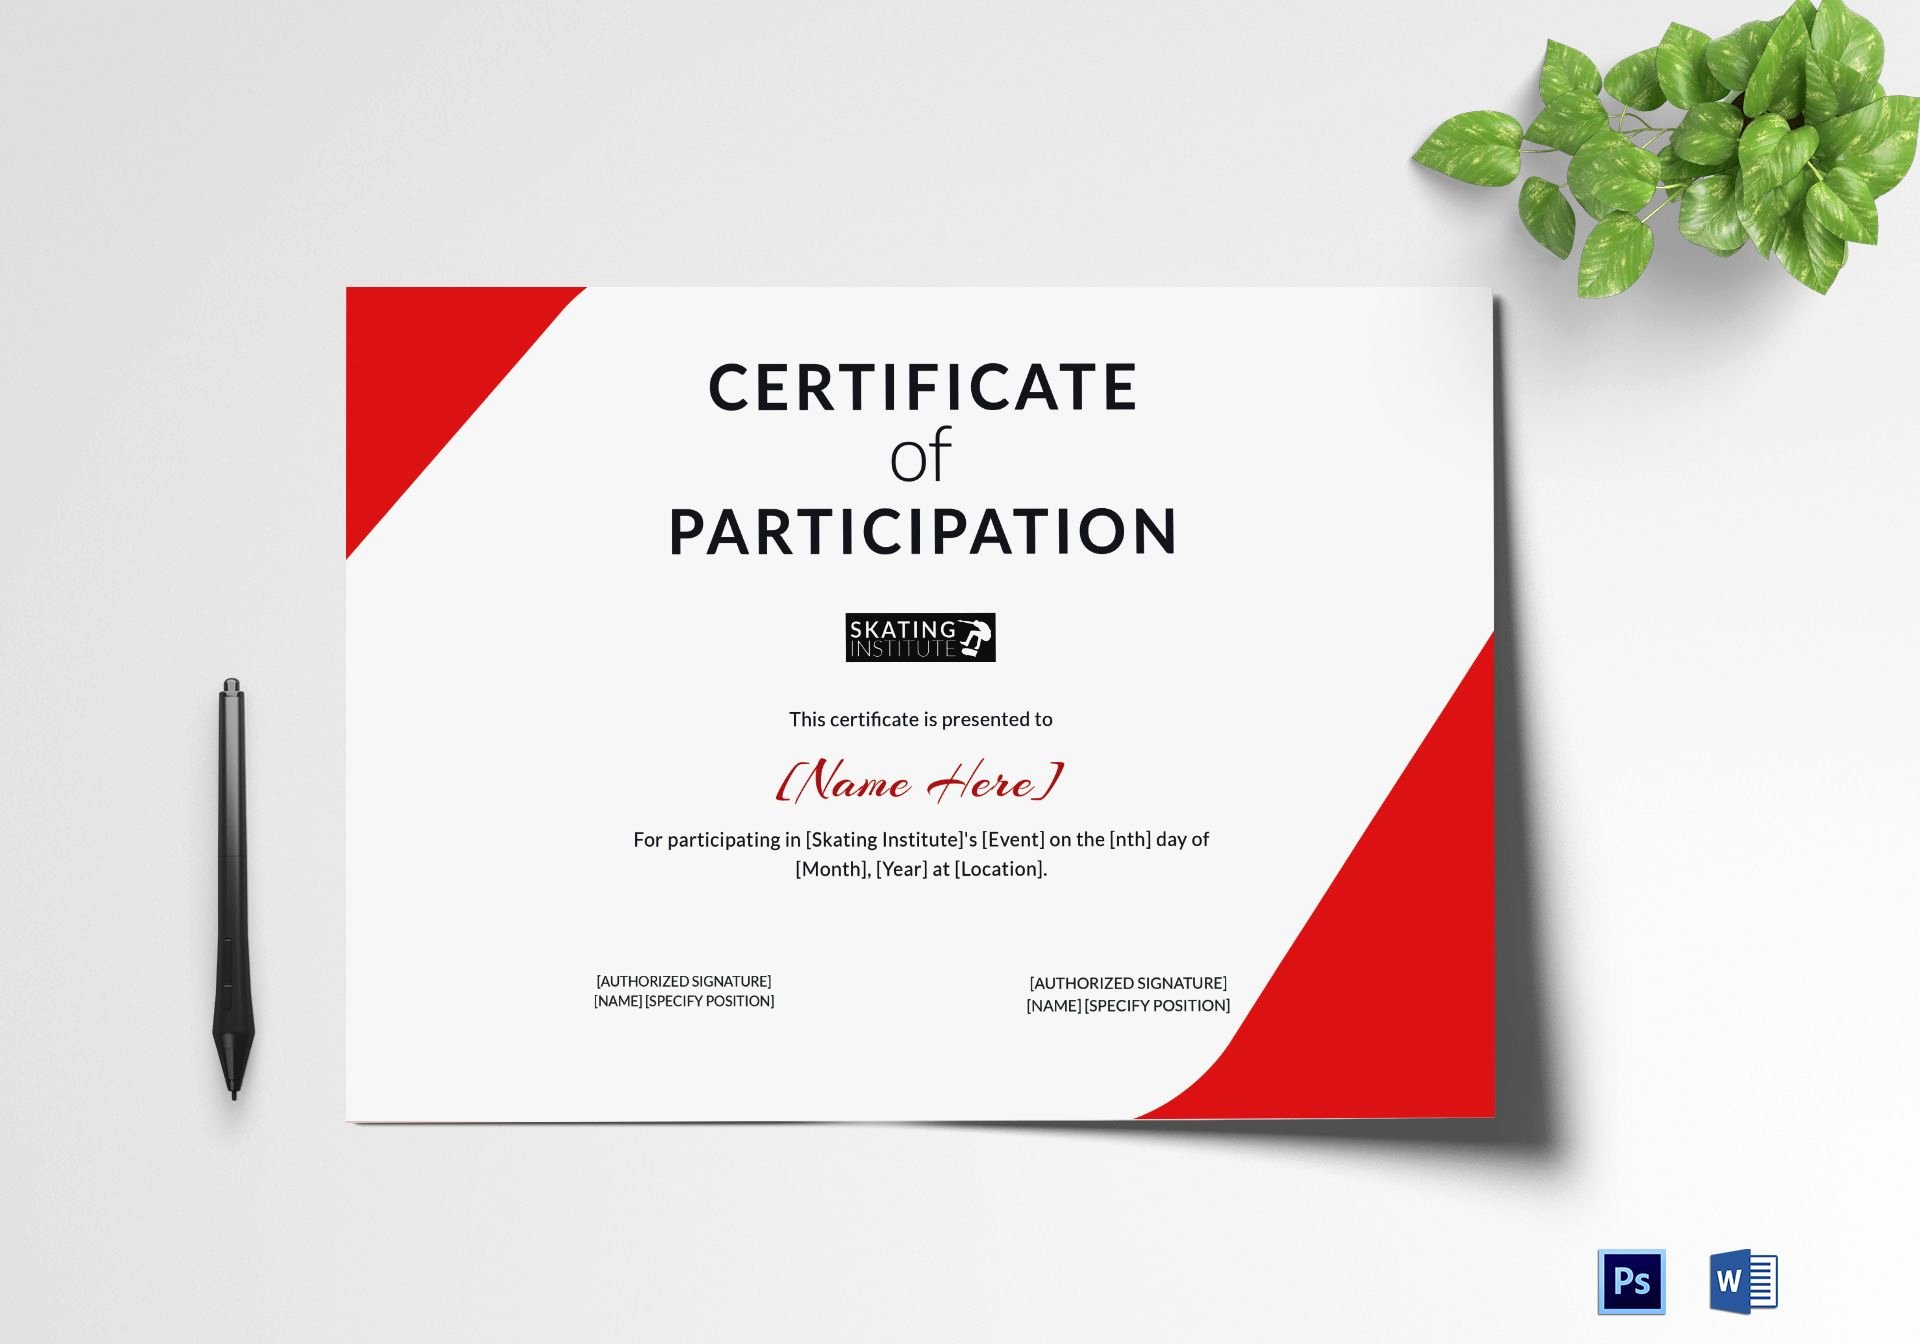 Certificate Of Participation Design Inspirational Certificate Of Participation for Skating Design Template